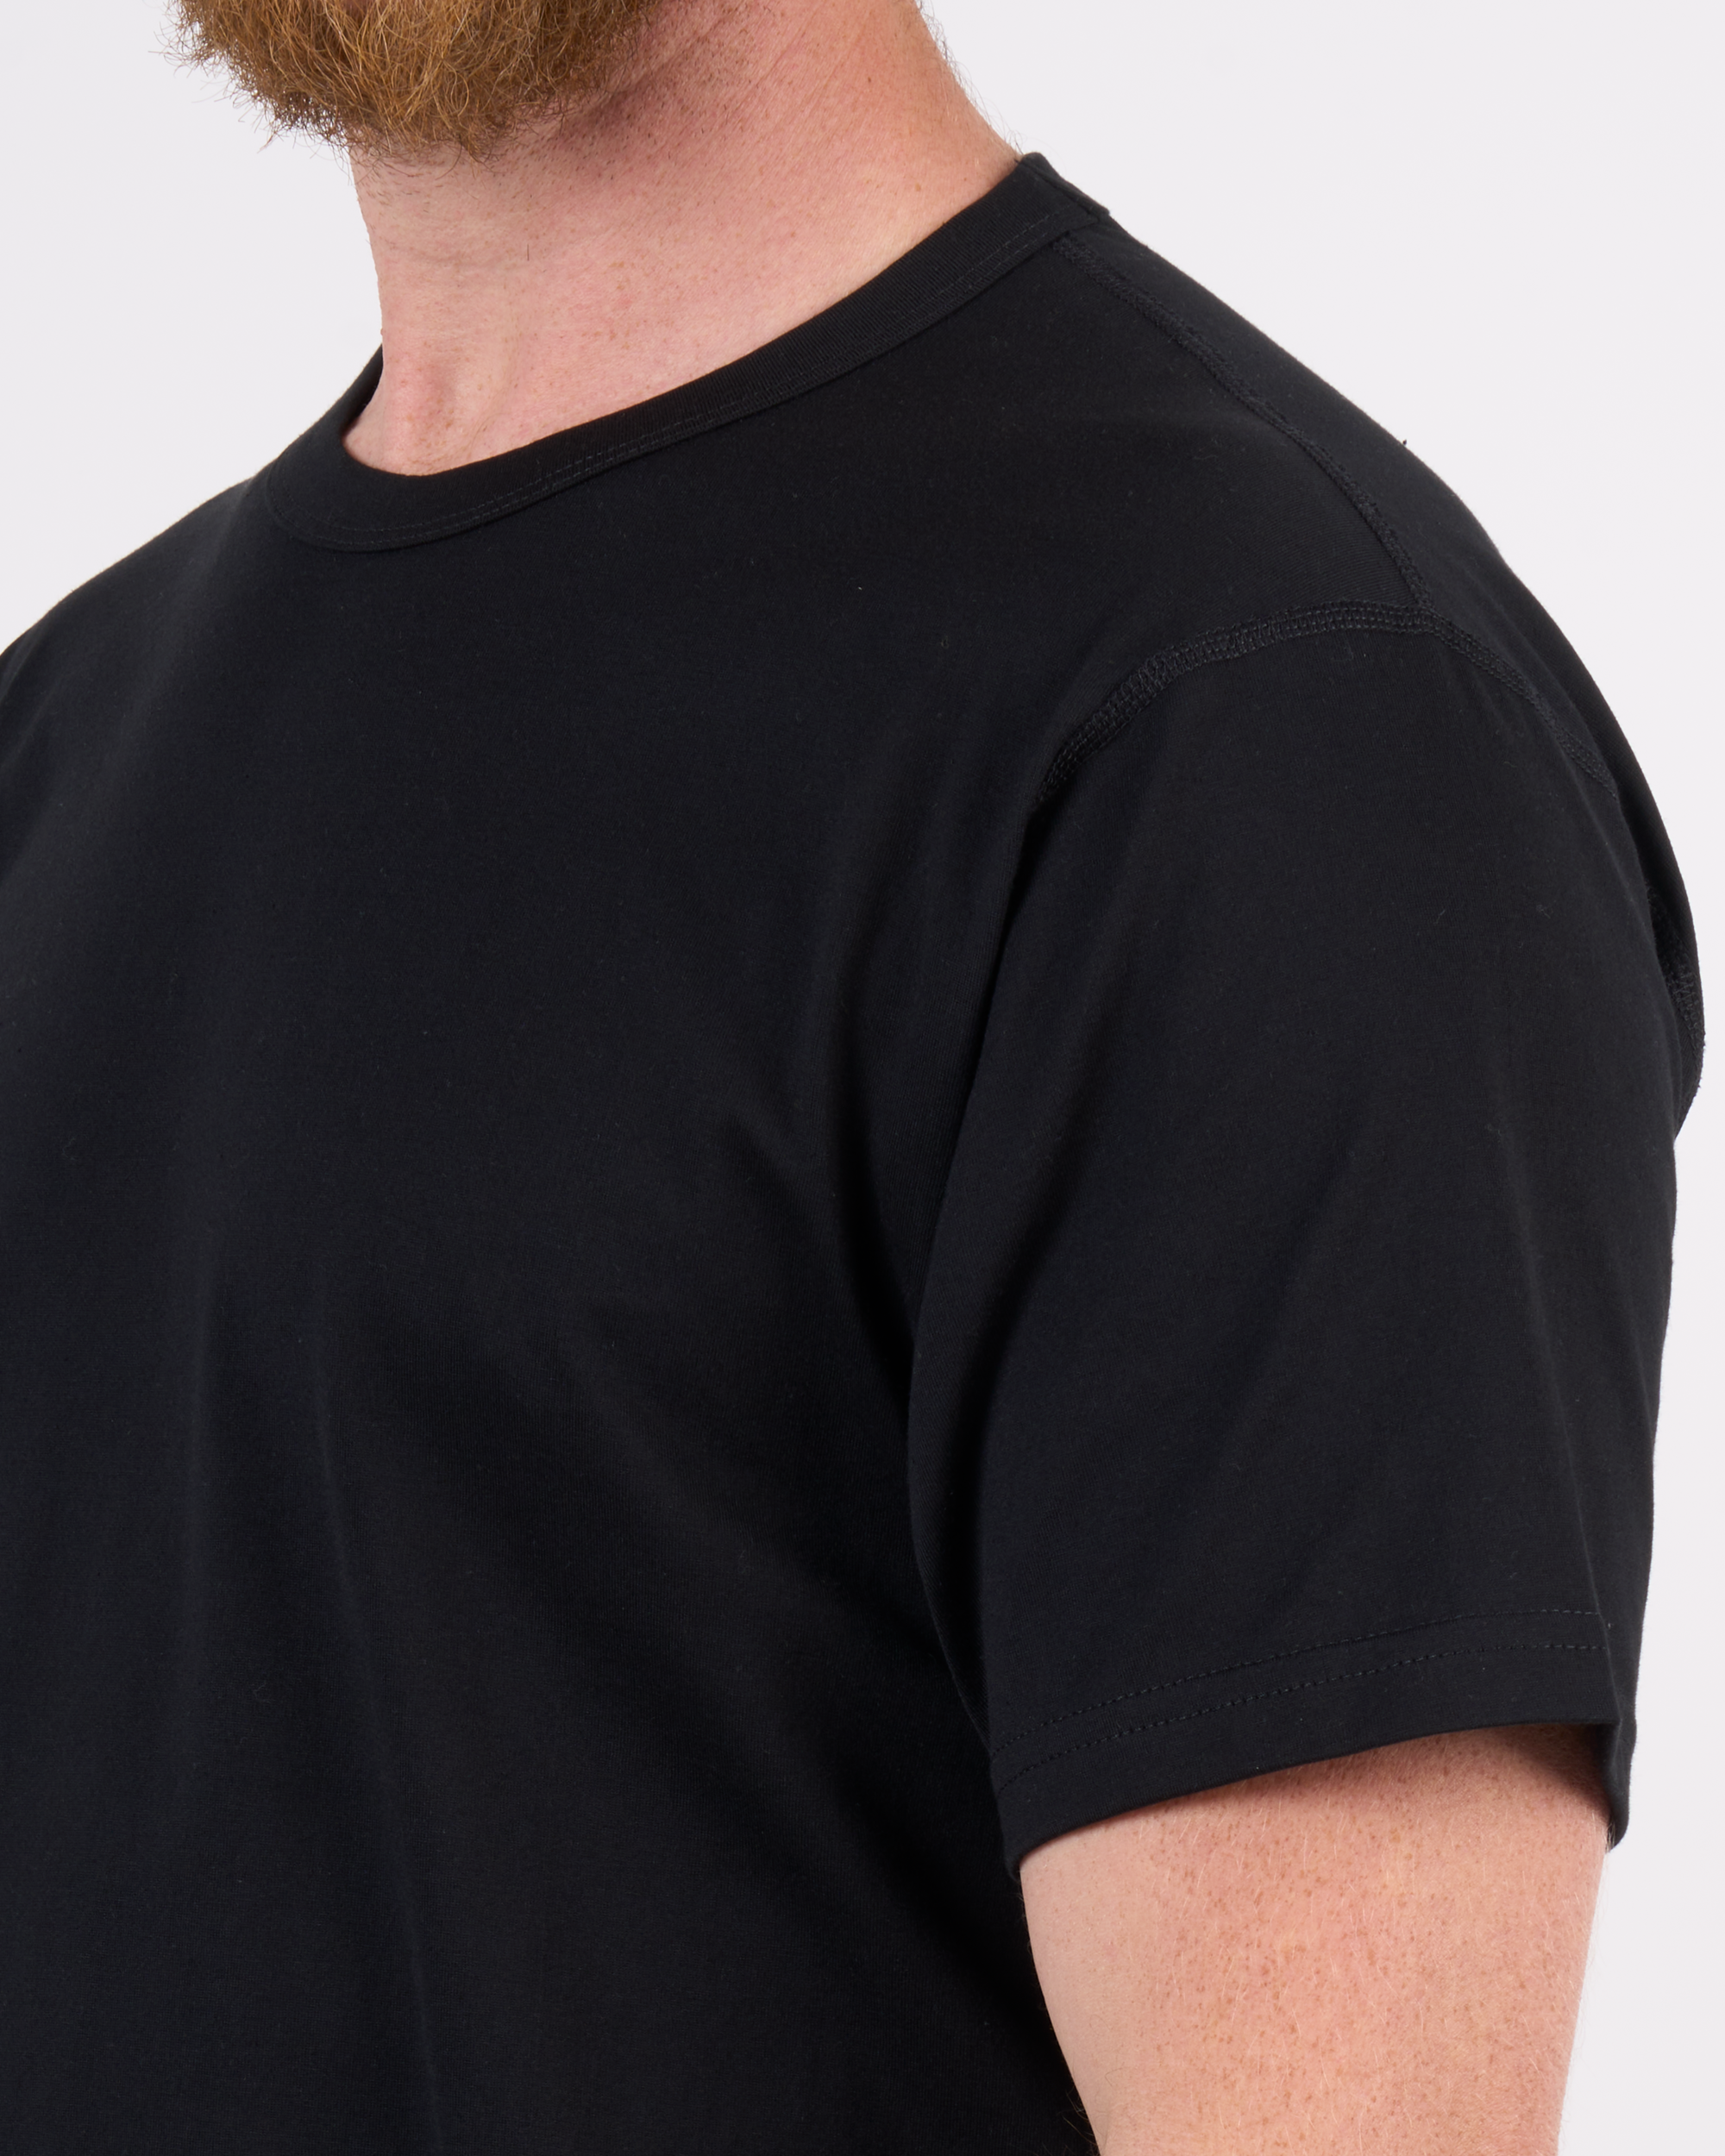 Foreign Rider Co Supima Cotton Black Short Sleeve T-Shirt Shoulder Flat-lock Stitch Detail